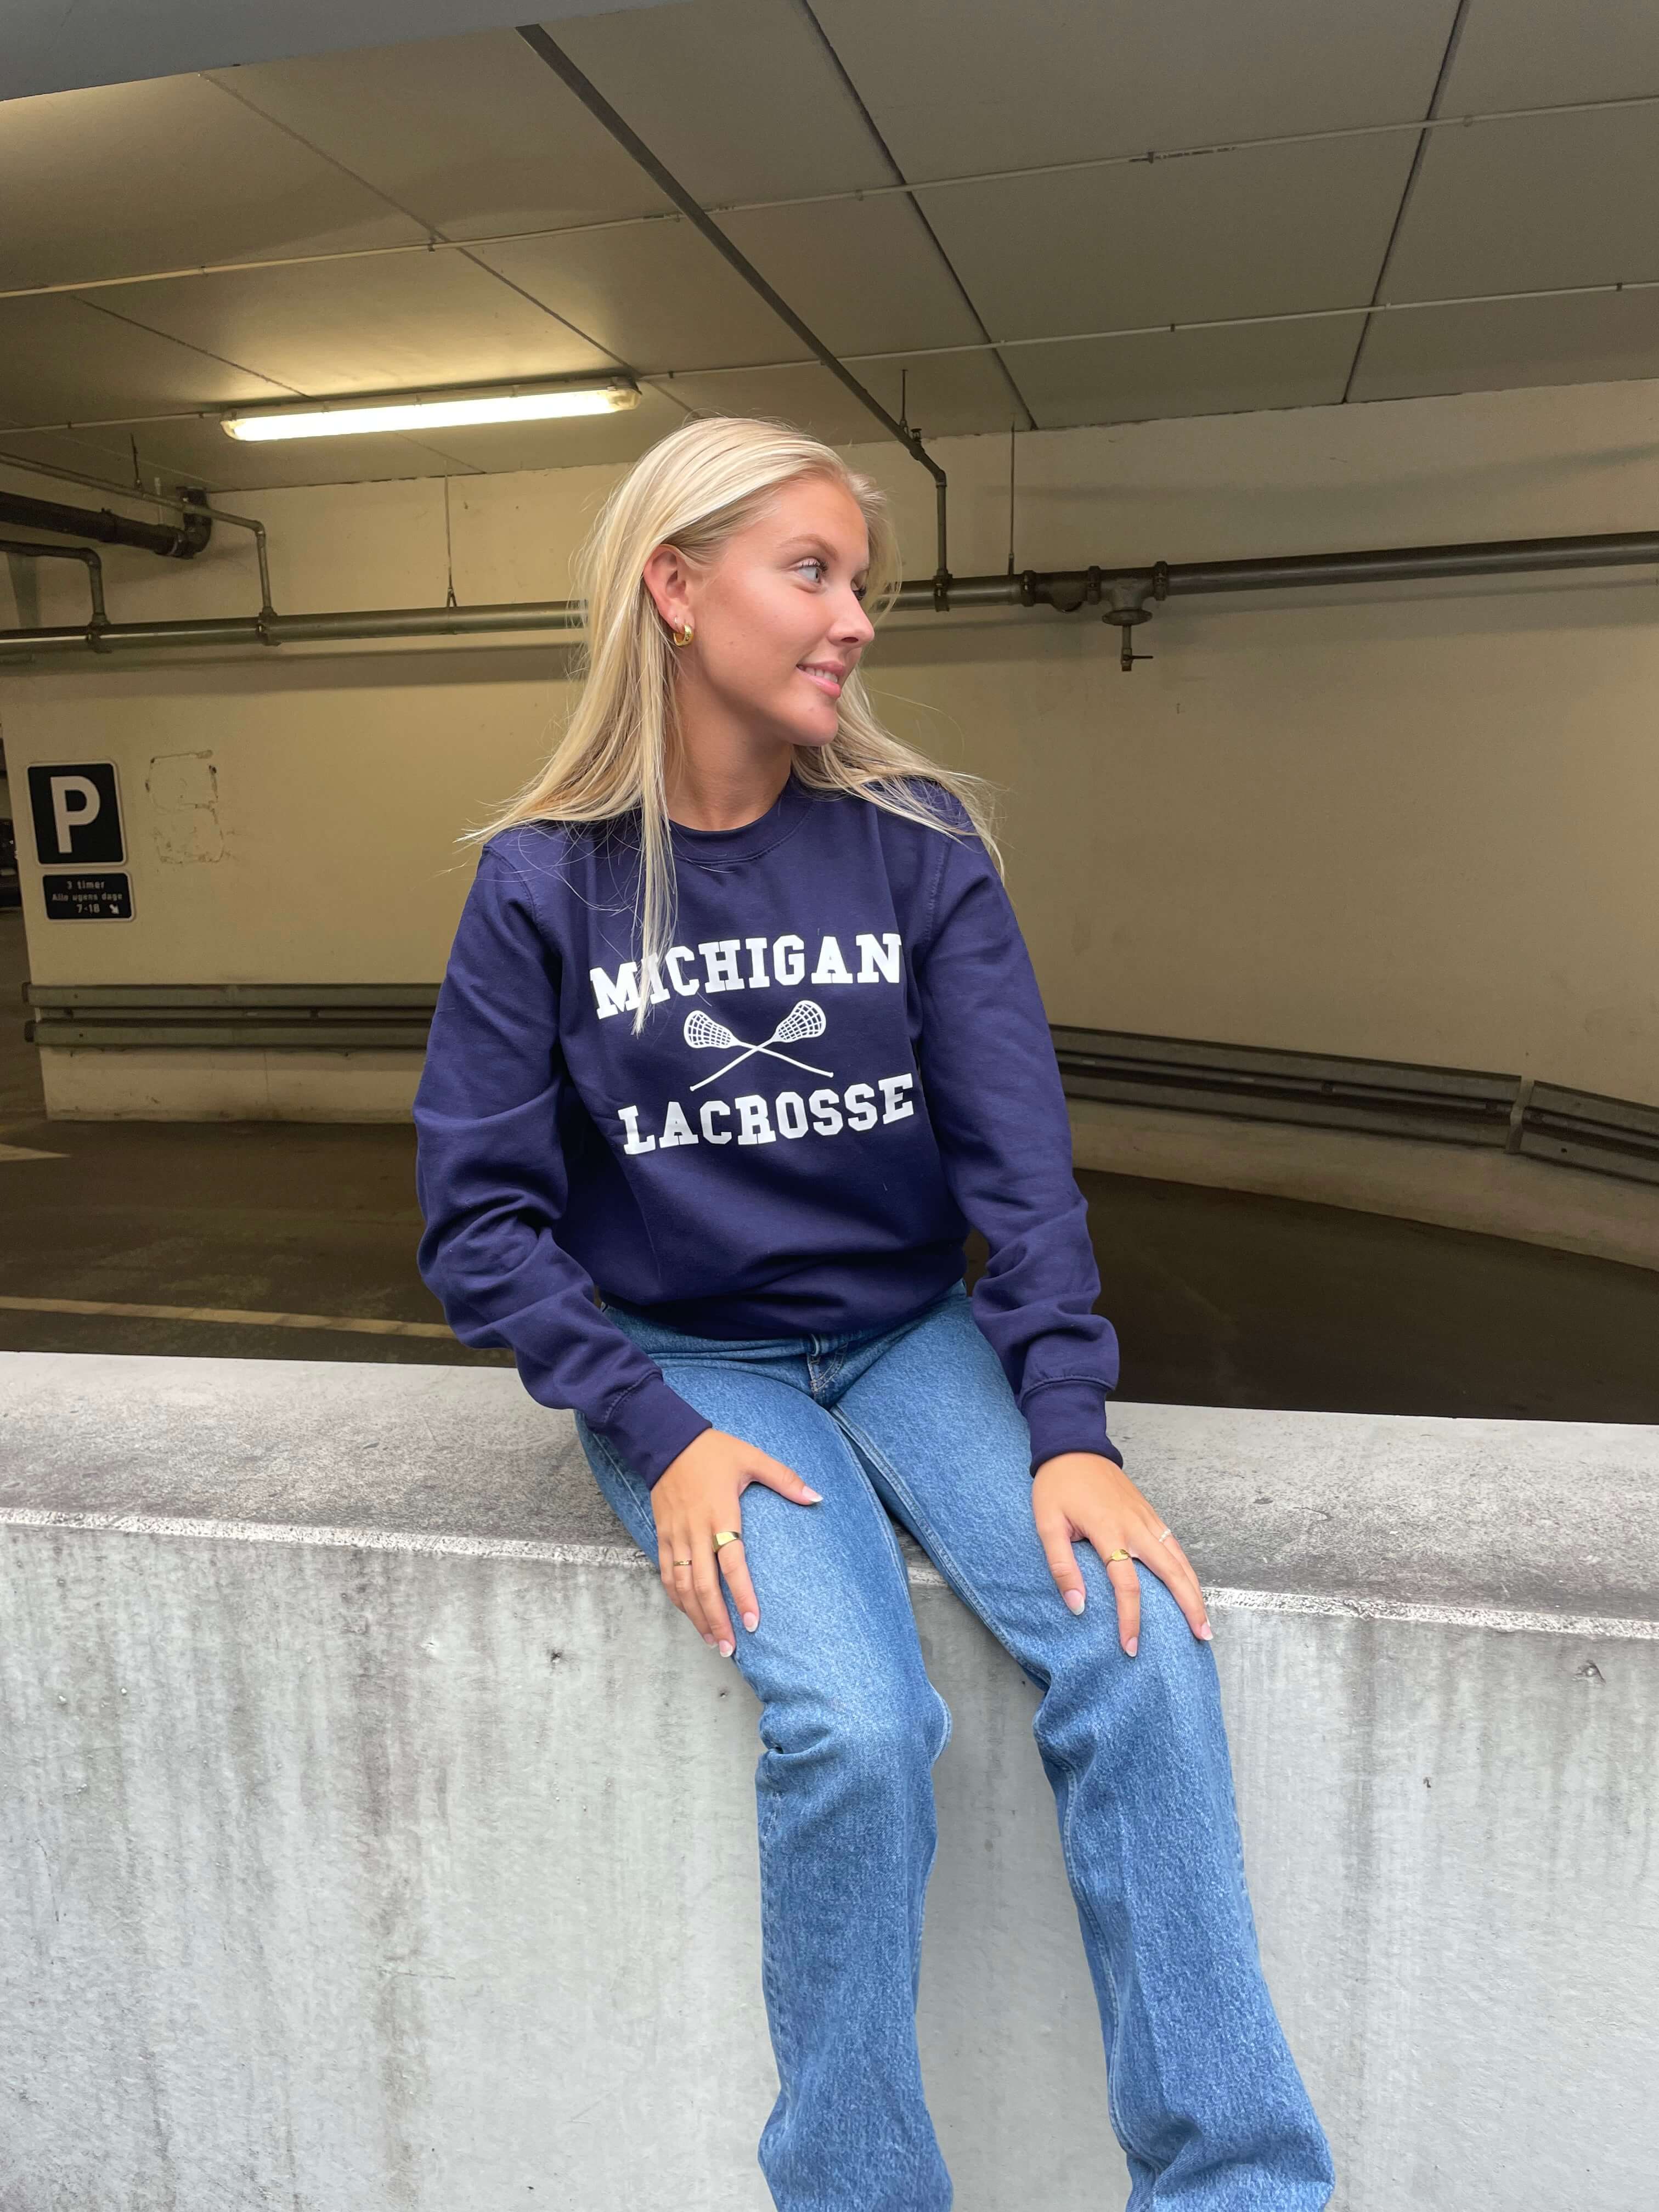 Michigan Lacrosse - Navy Sweatshirt